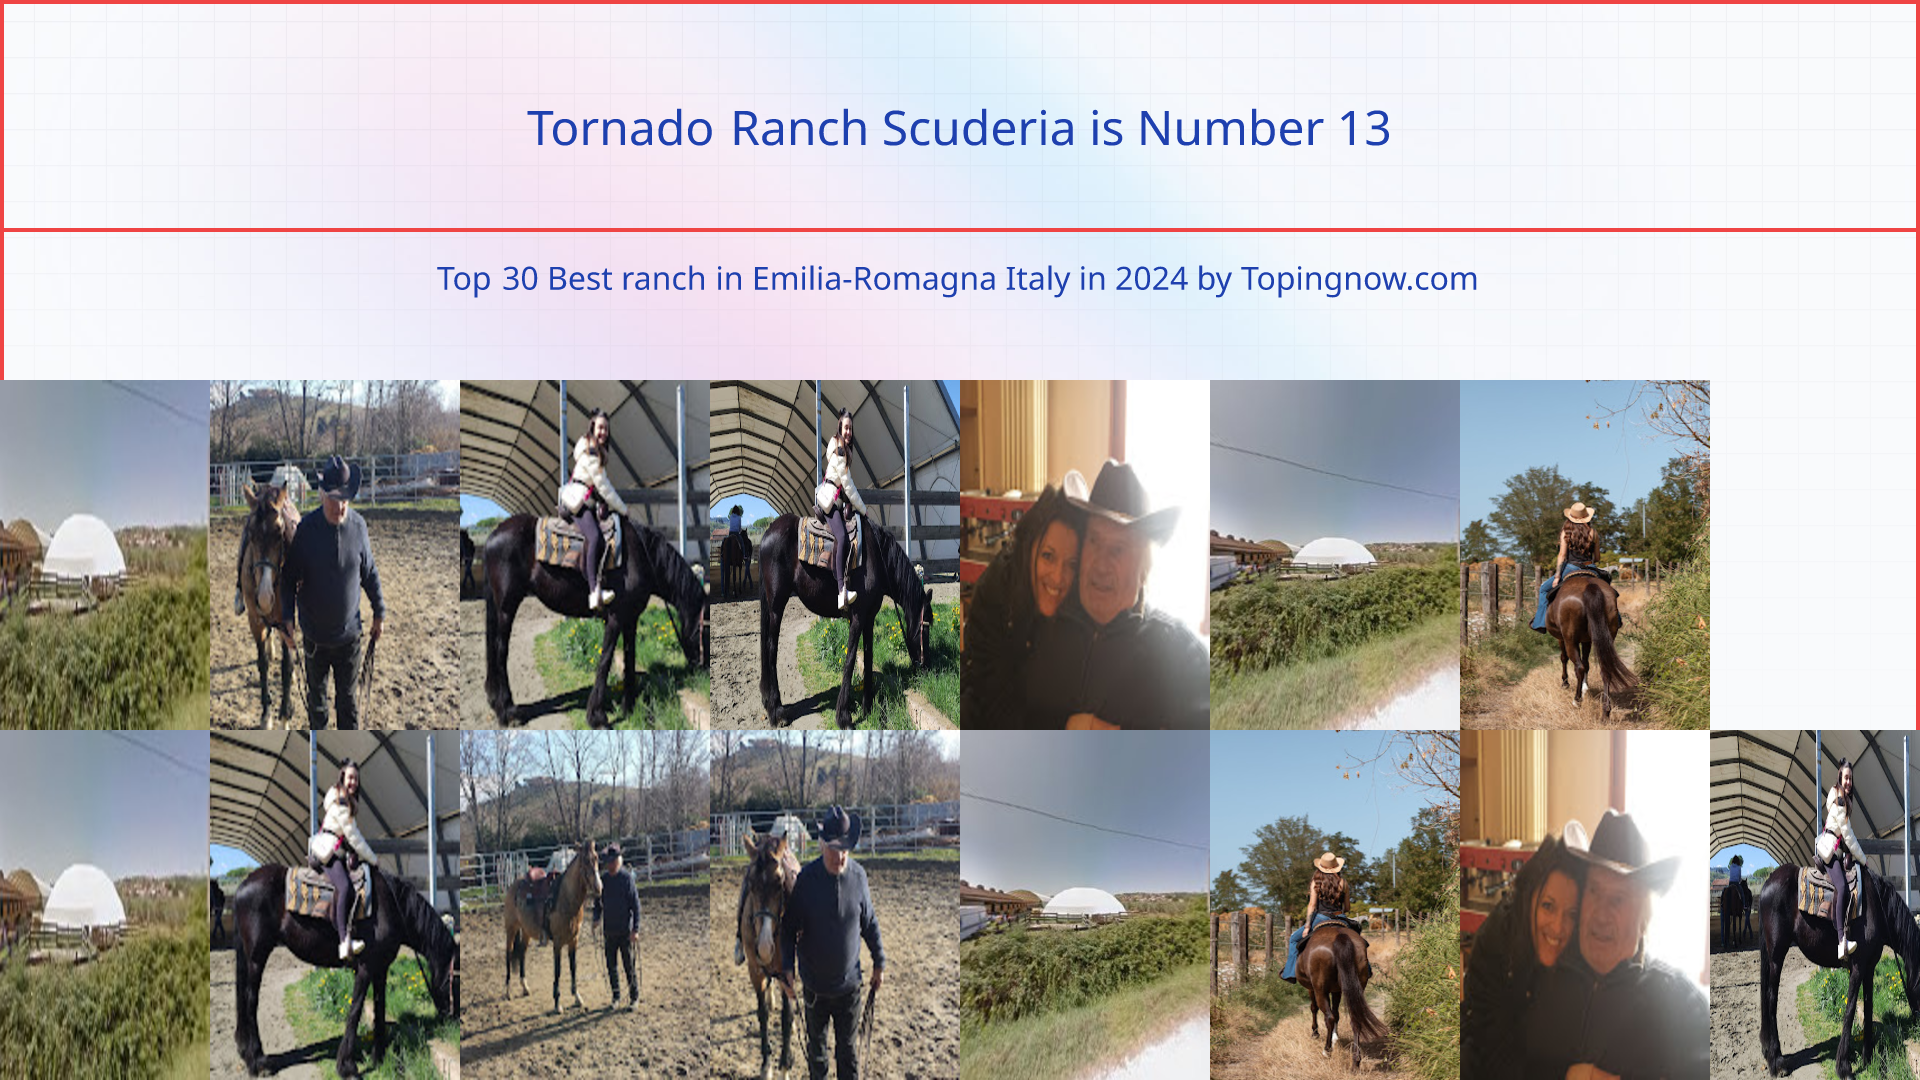 Tornado Ranch Scuderia: Top 30 Best ranch in Emilia-Romagna Italy in 2024